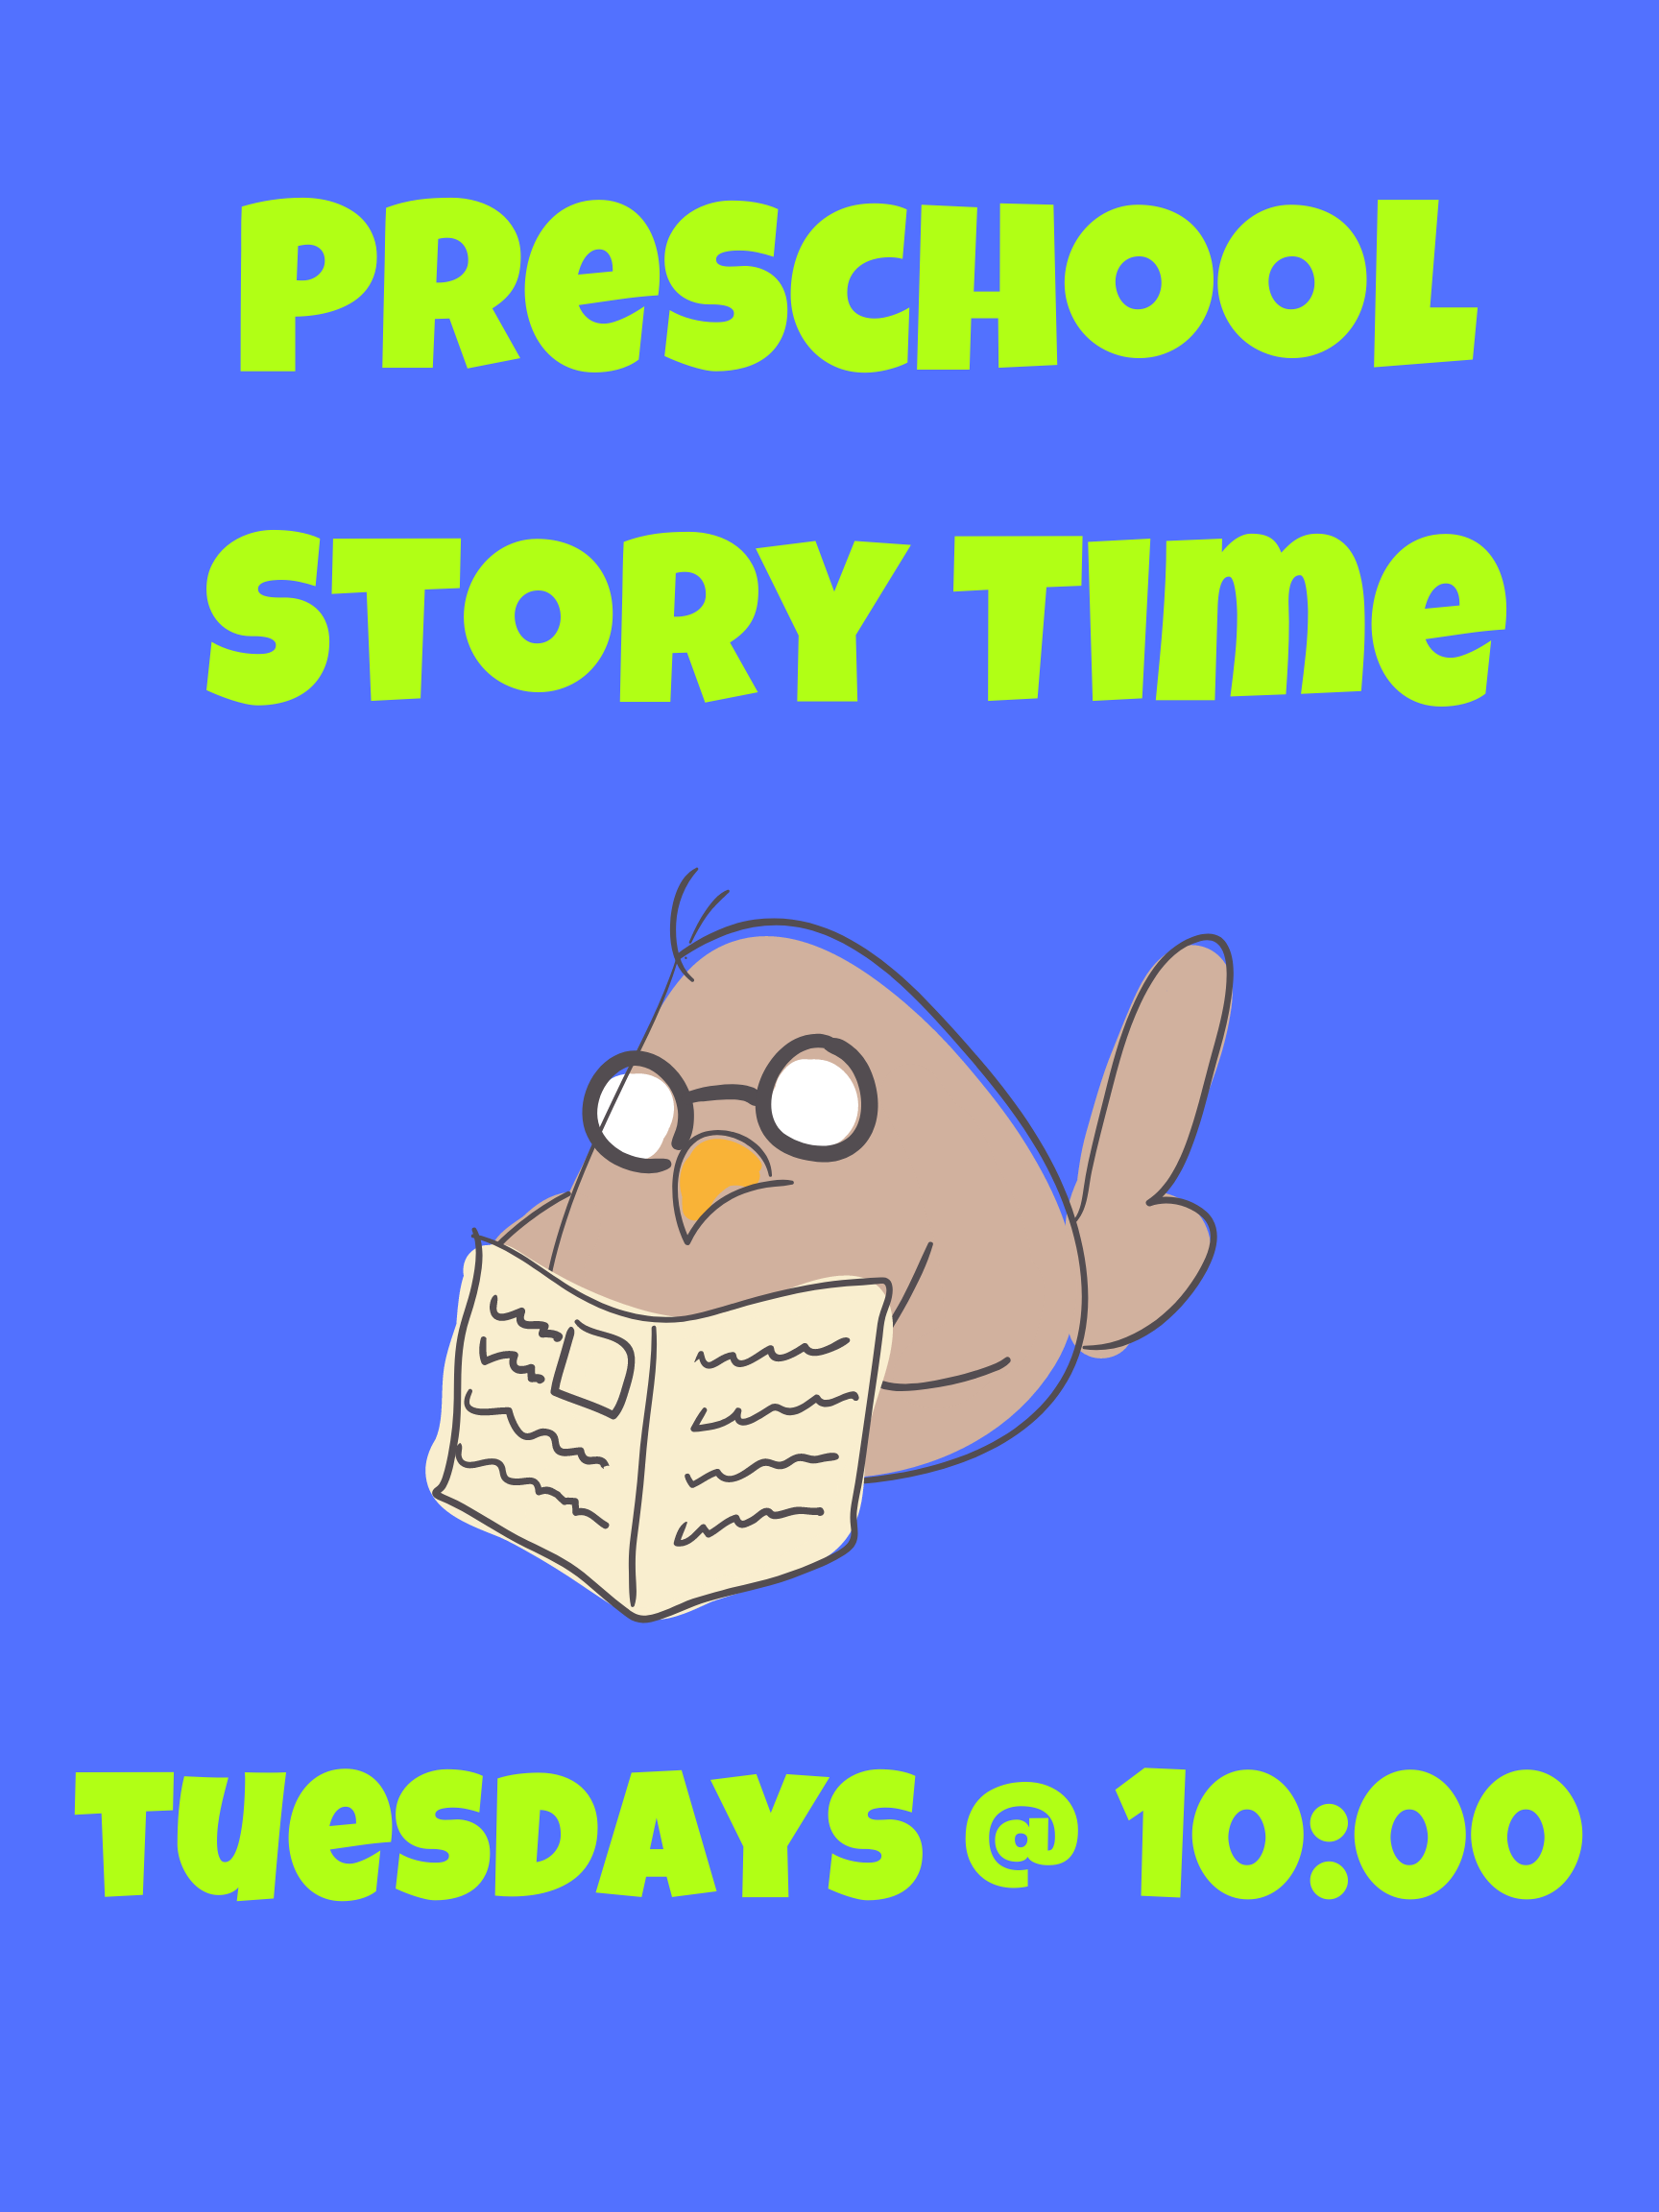 Preschool Story Time Image